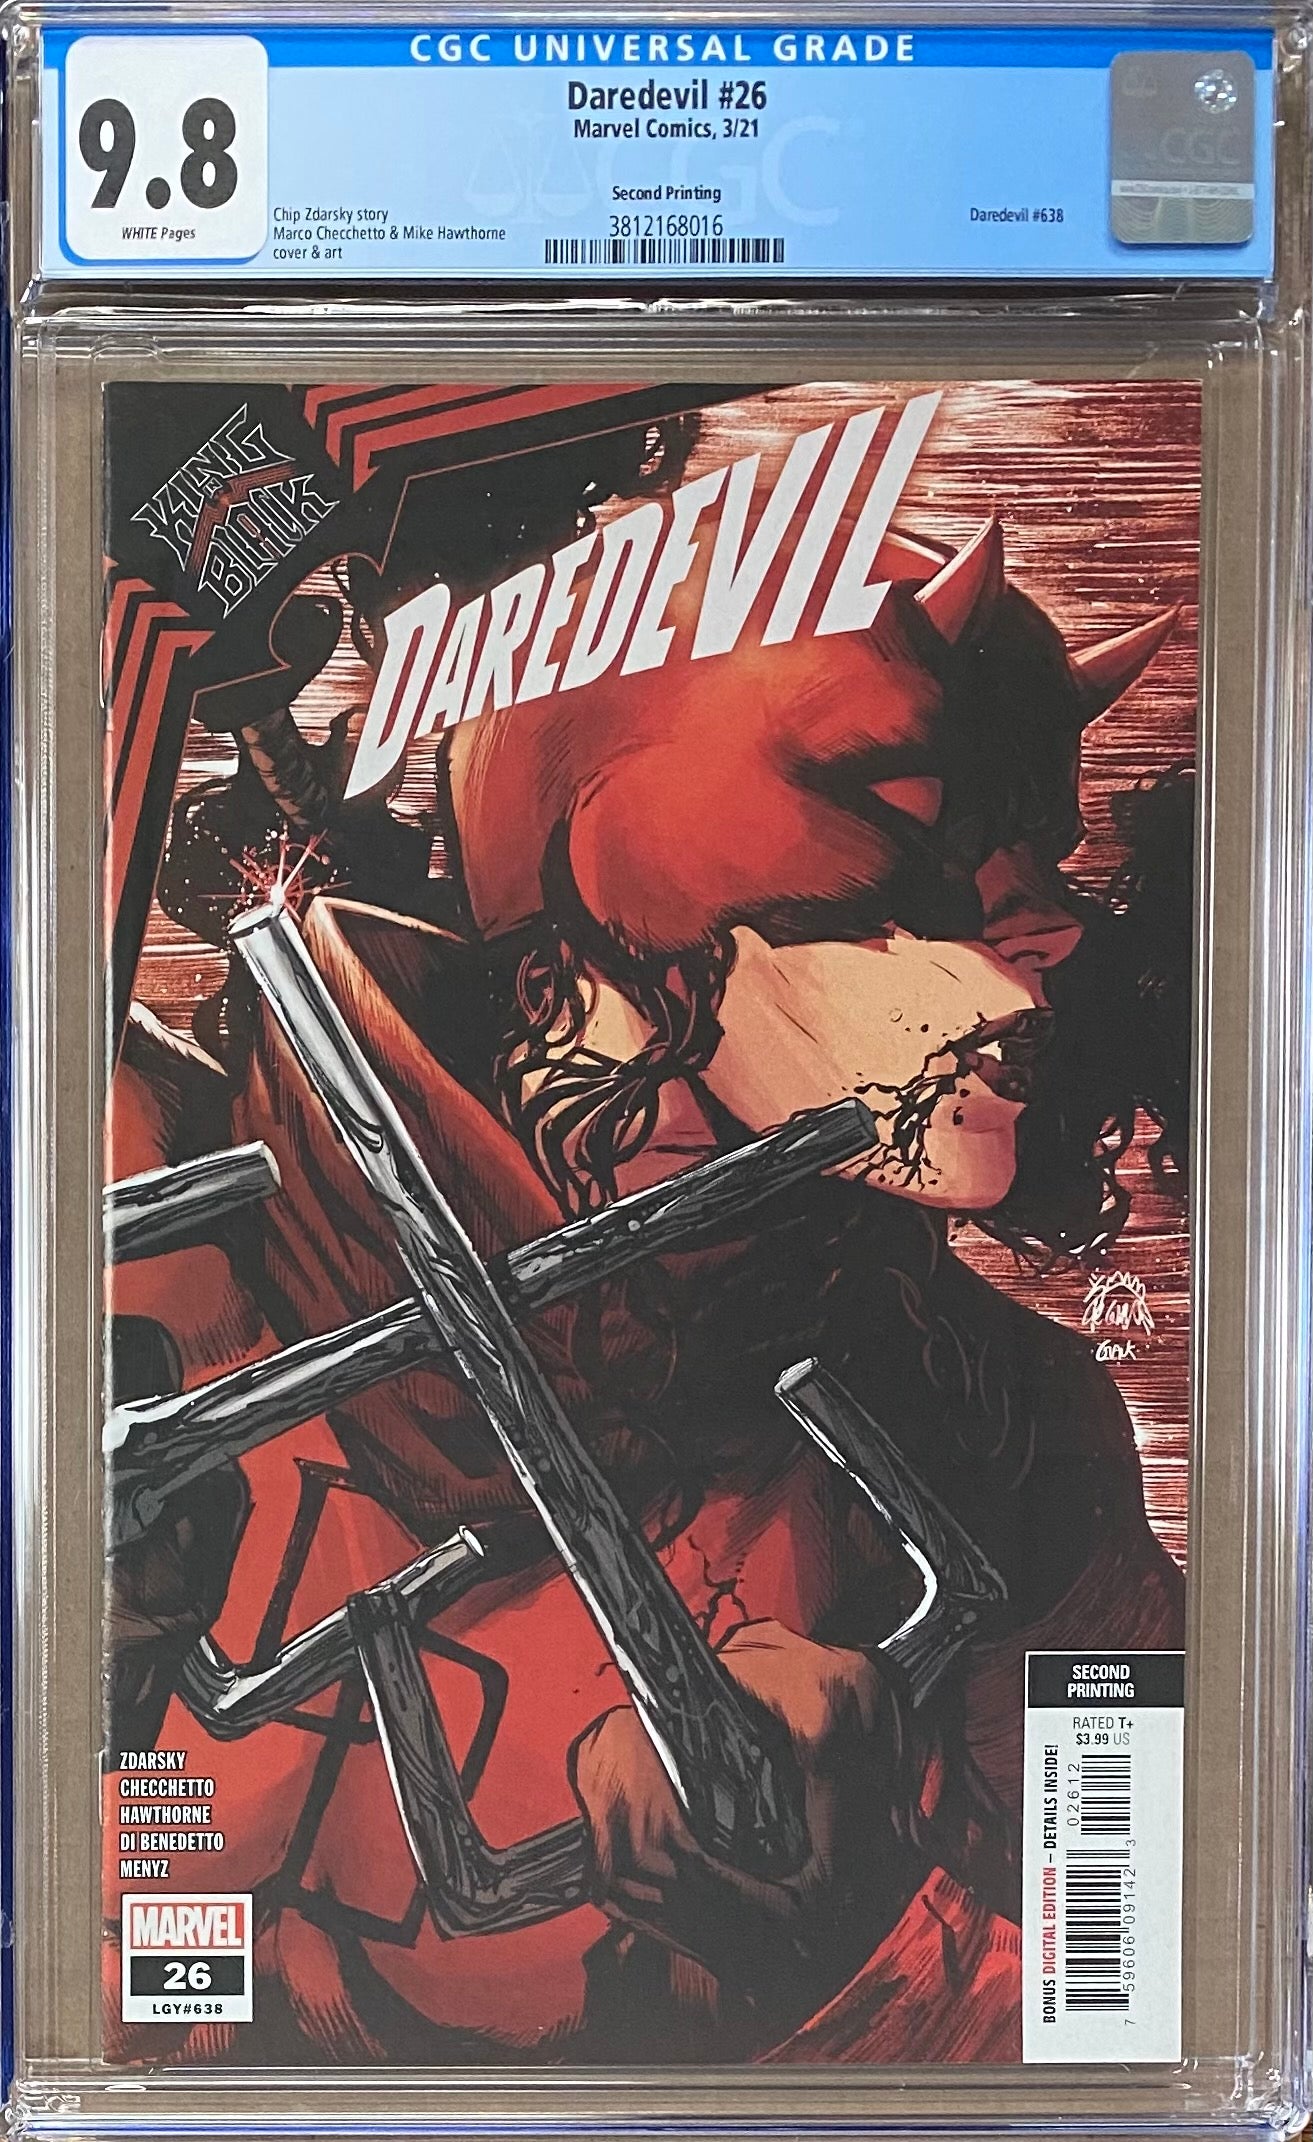 Daredevil #26 Second Printing CGC 9.8